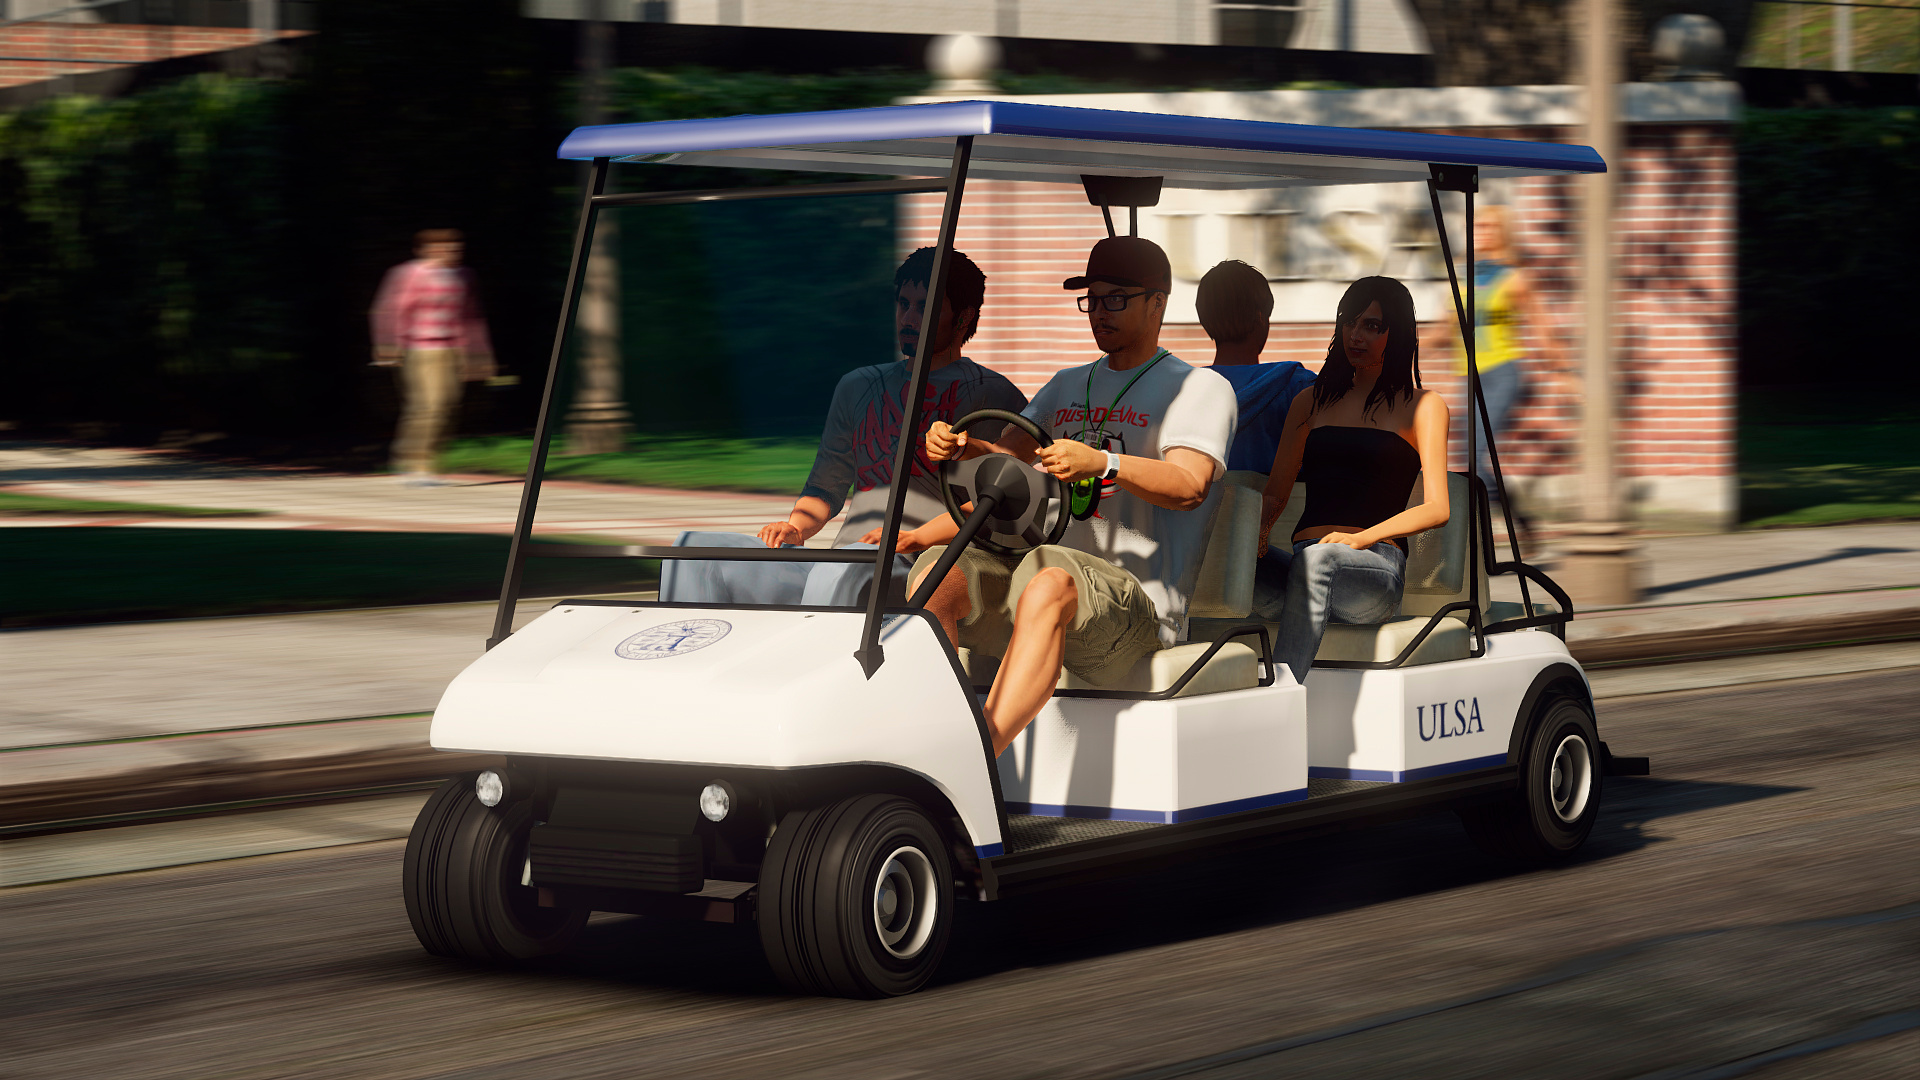 The GTA Place - Super Golf Cart Mod